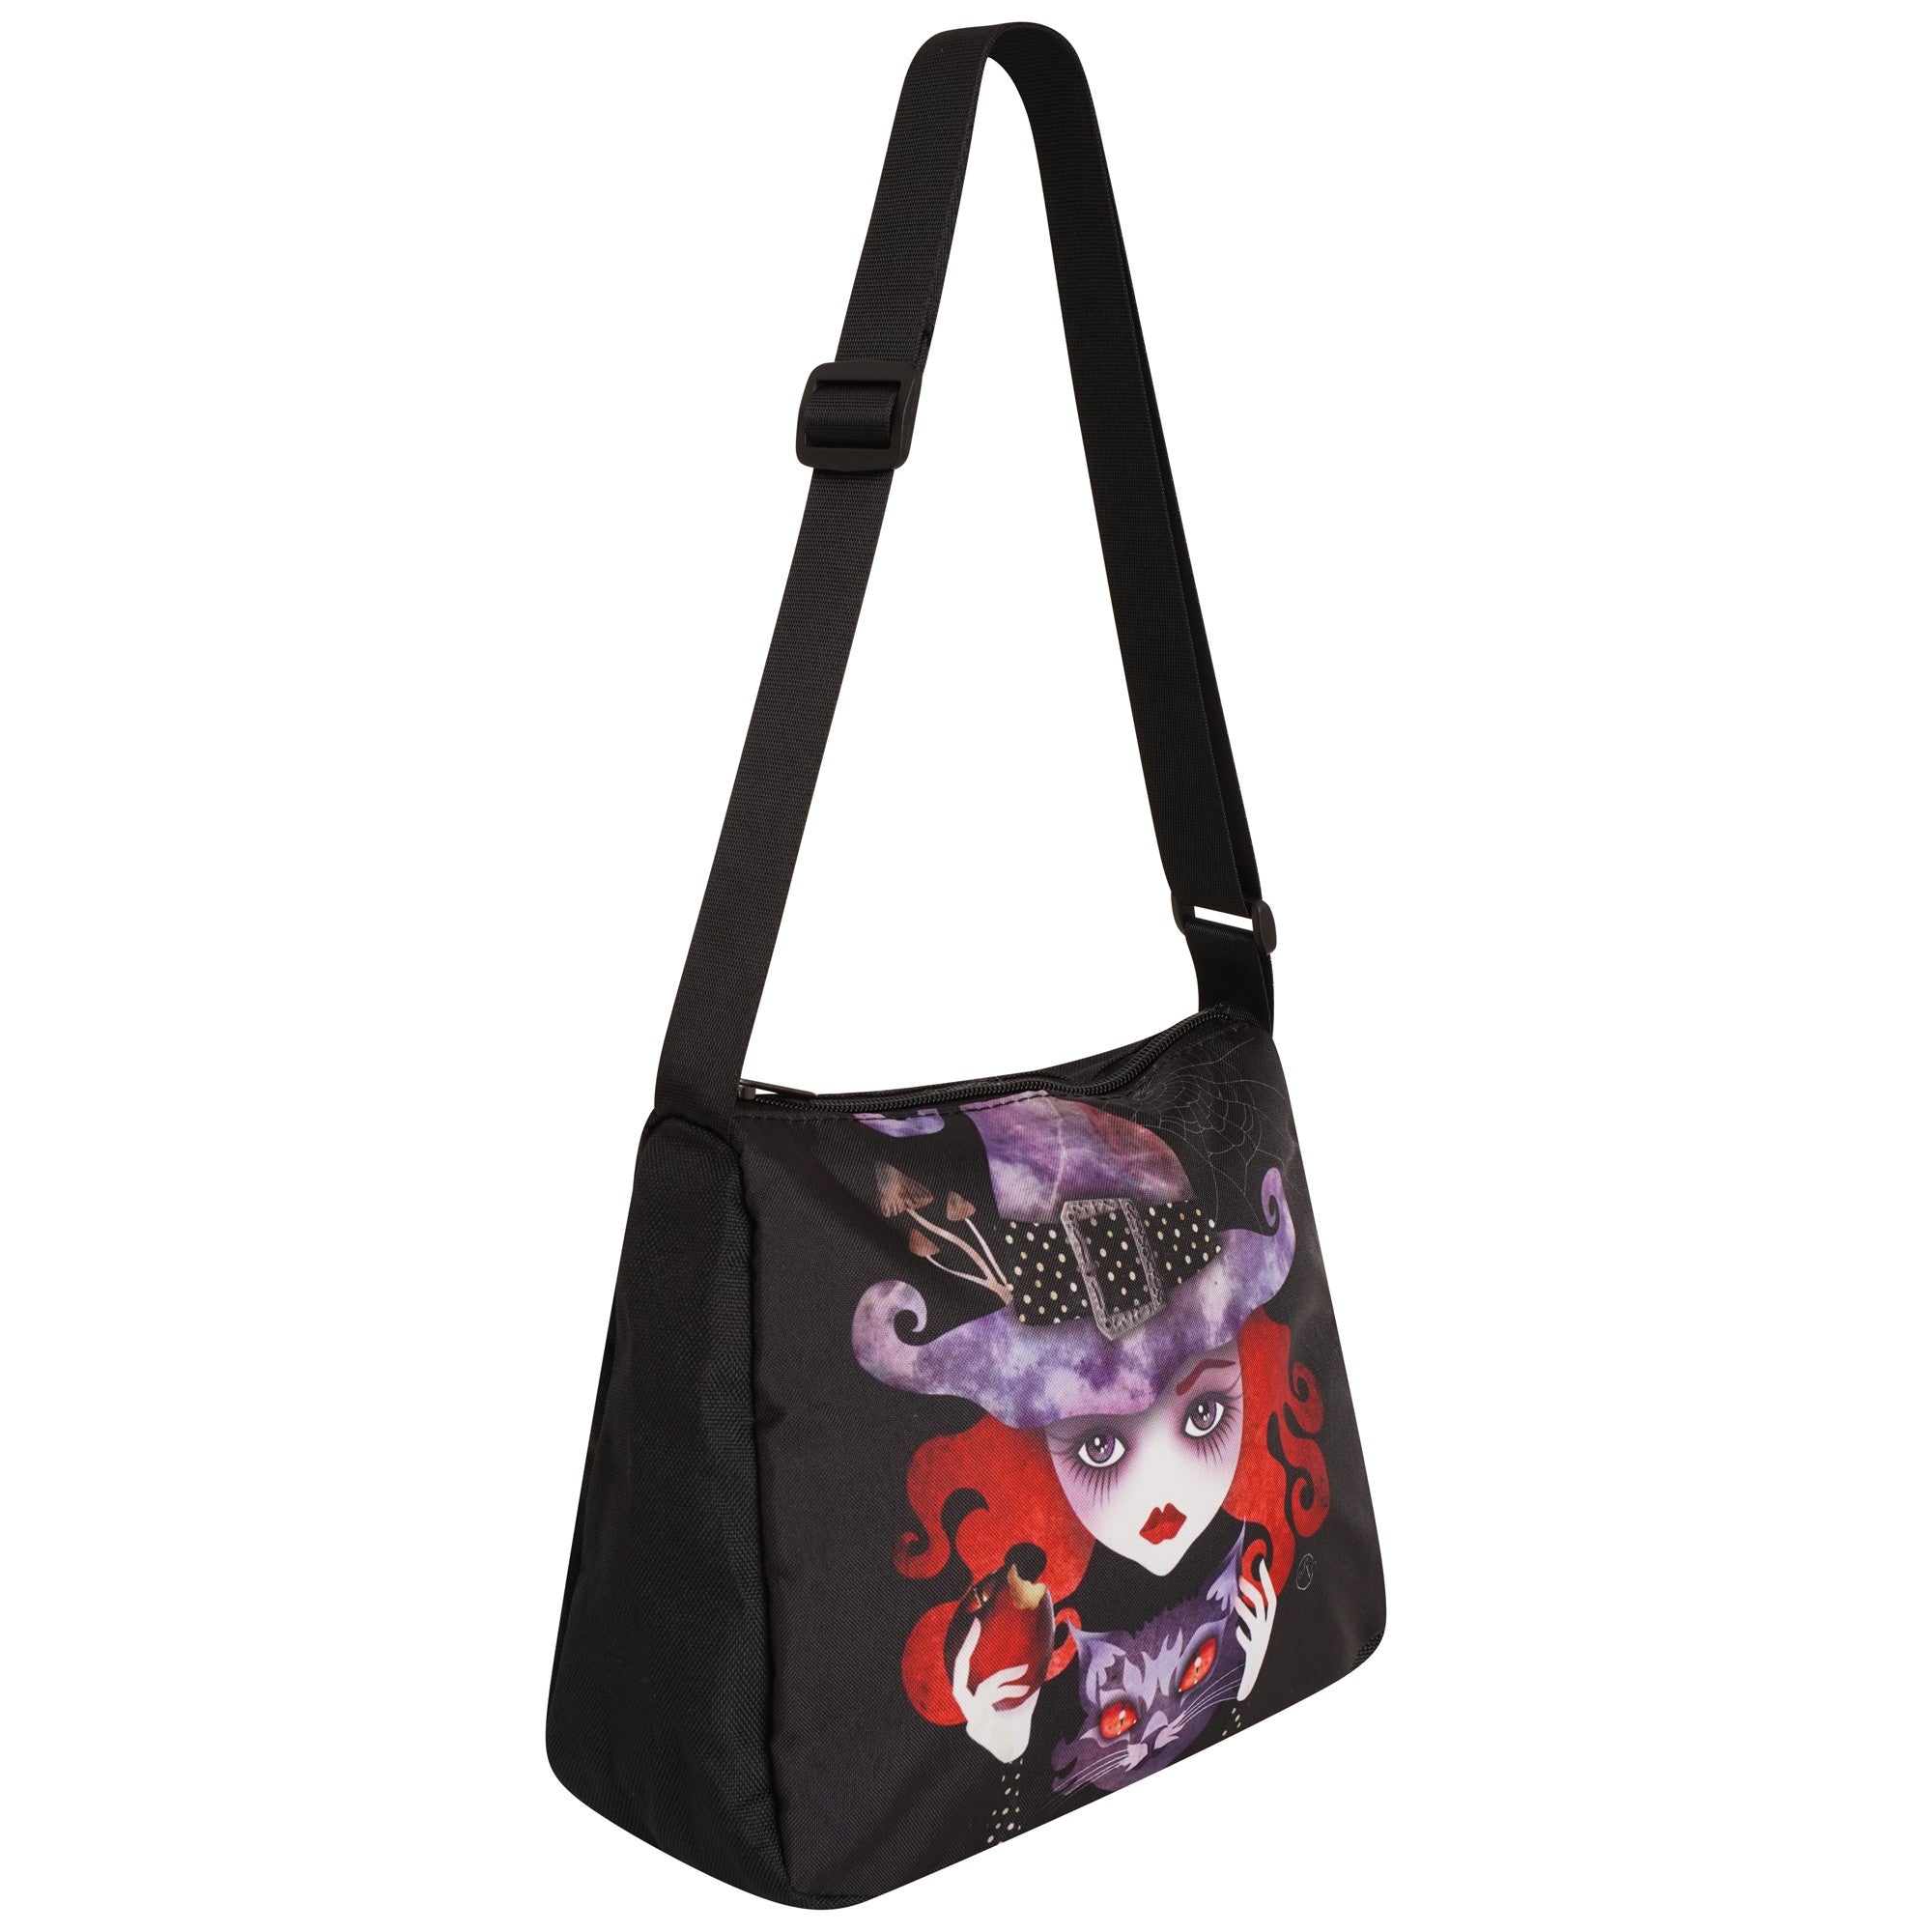 Ro Rox Small Handbag Makeup Cute Purse, Black, Witch-Cat